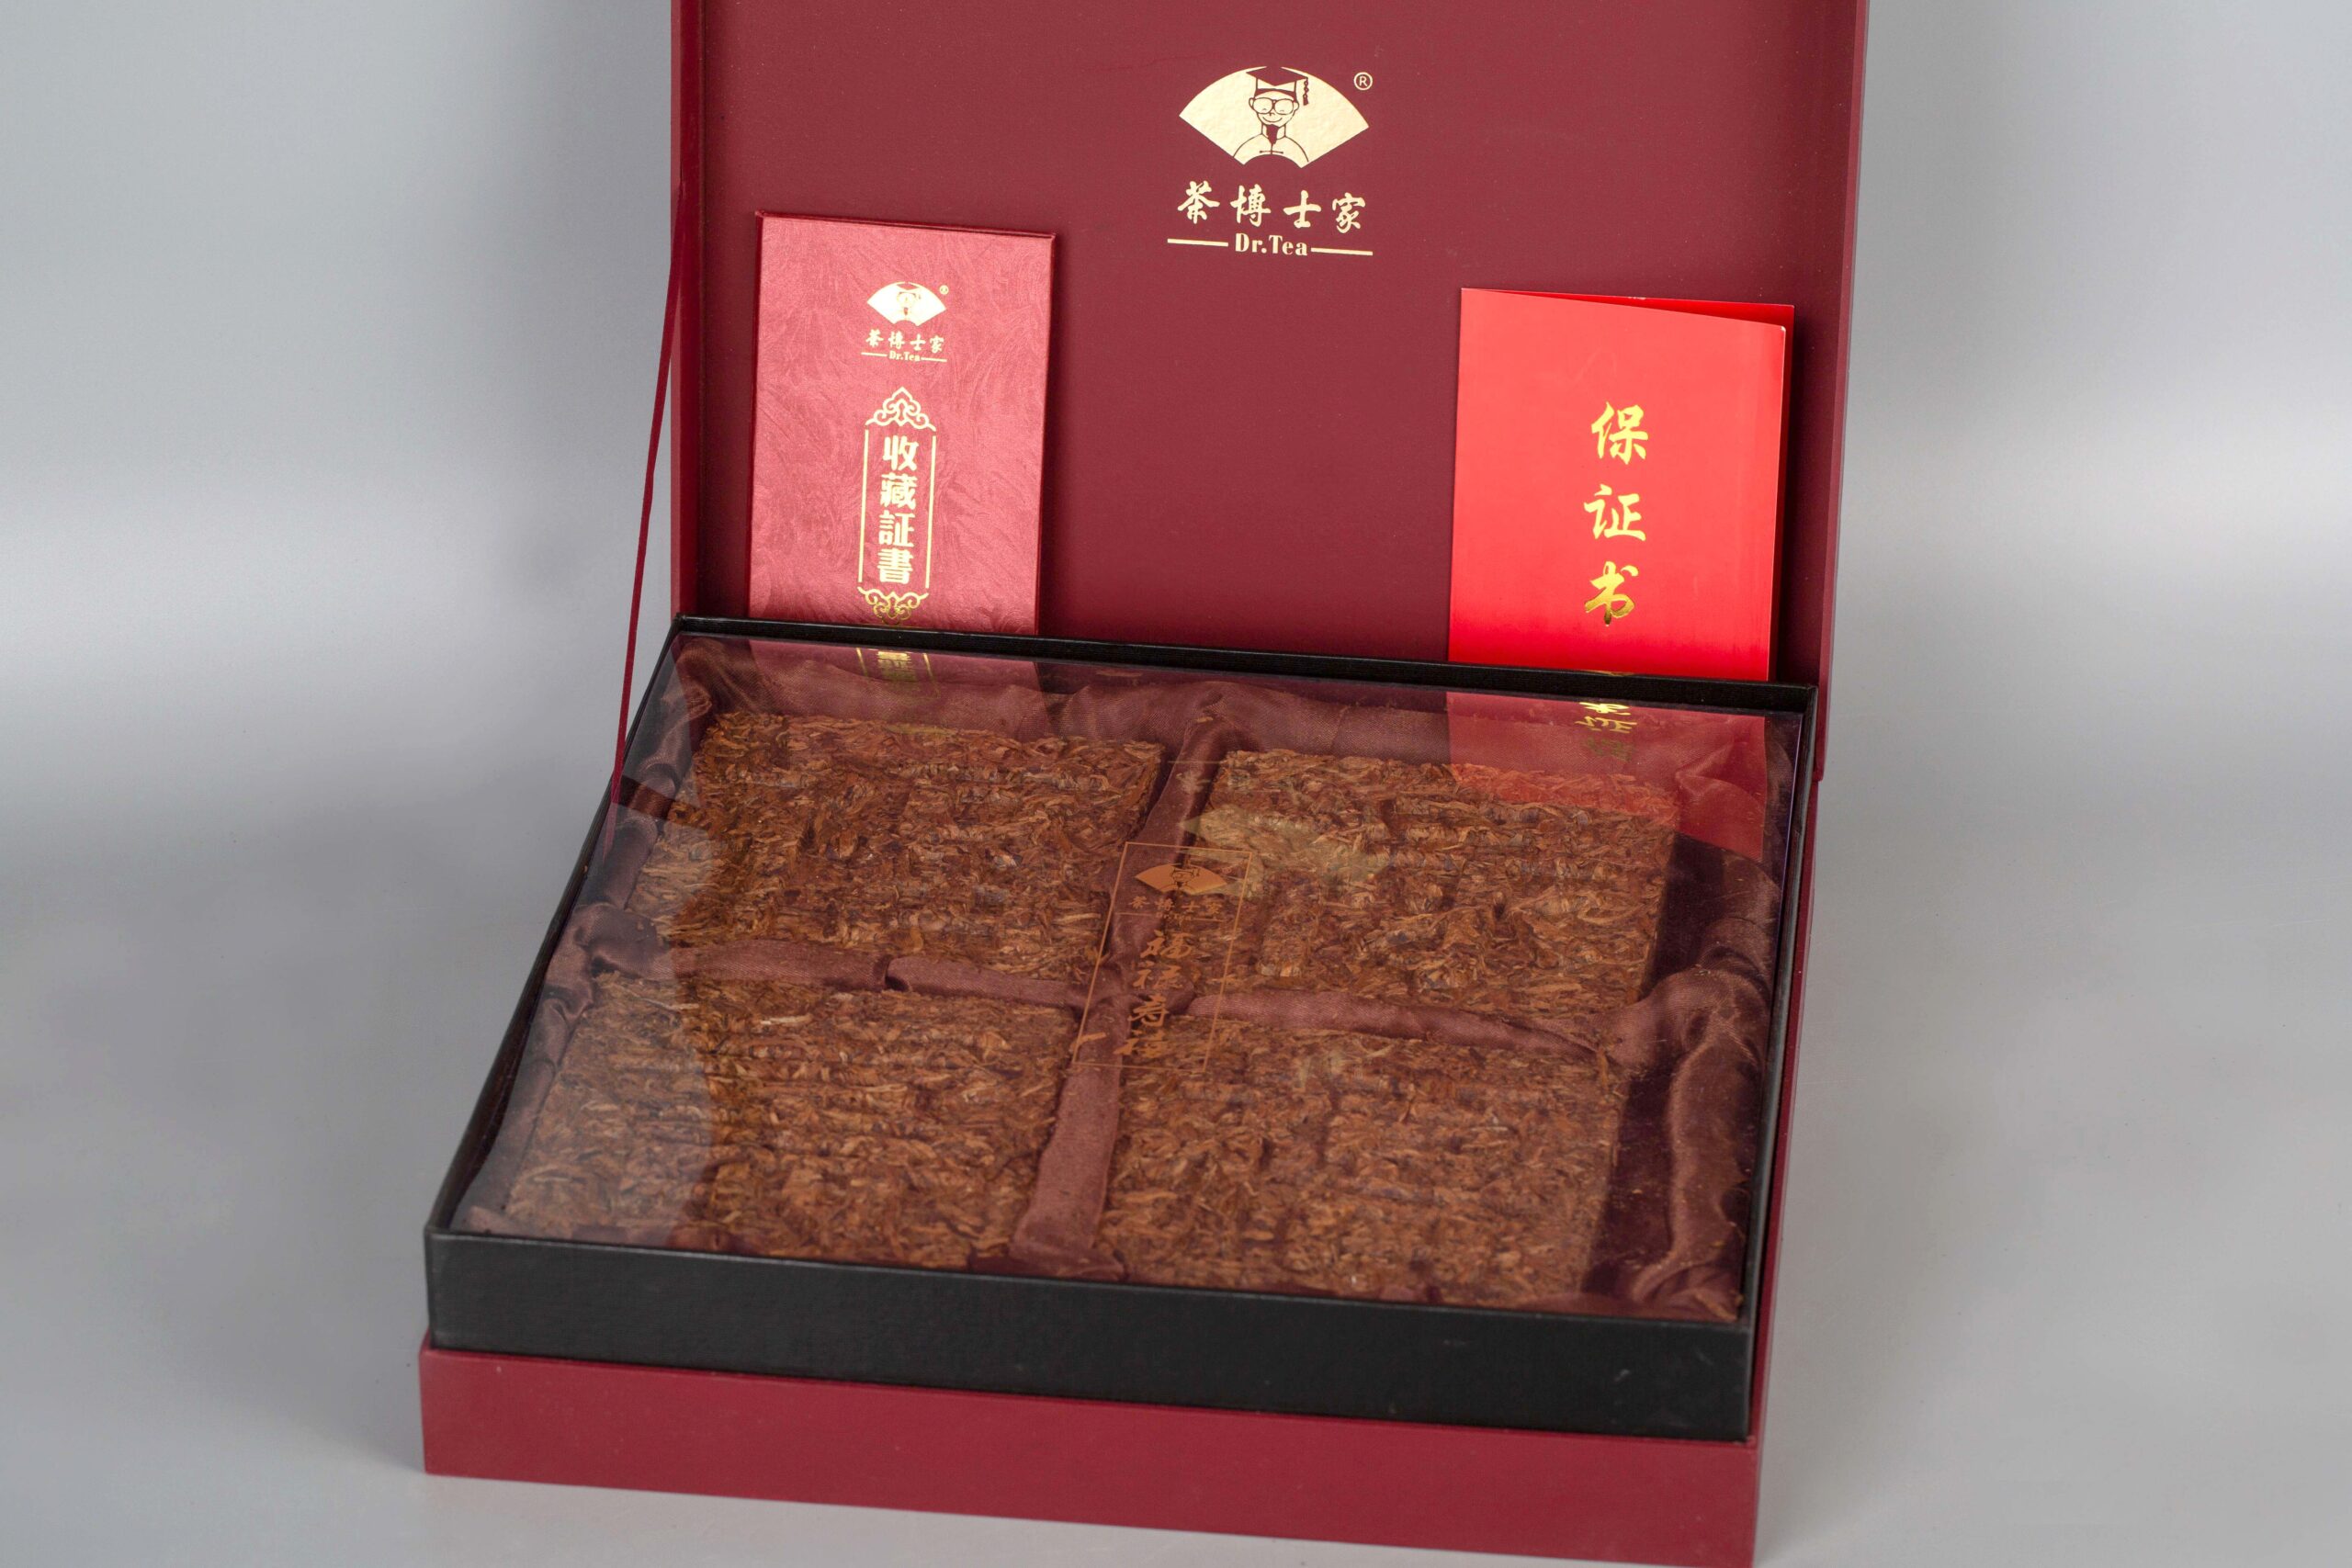 Beijing Doctor Tea Home Fu Lu Shou Xi Pu 'er Tea Tribute Brick 